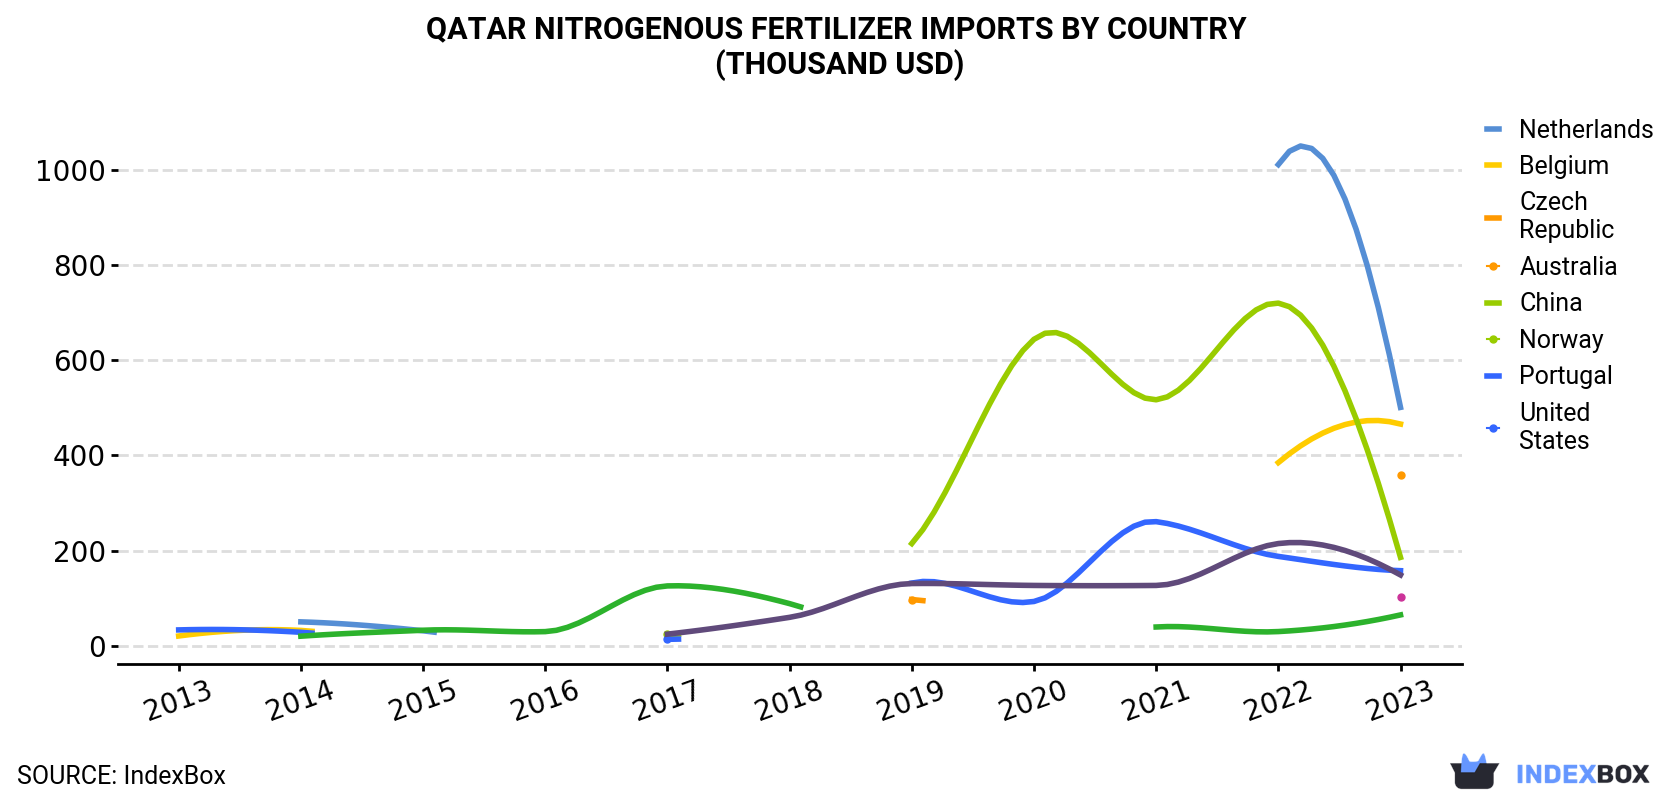 Qatar Nitrogenous Fertilizer Imports By Country (Thousand USD)